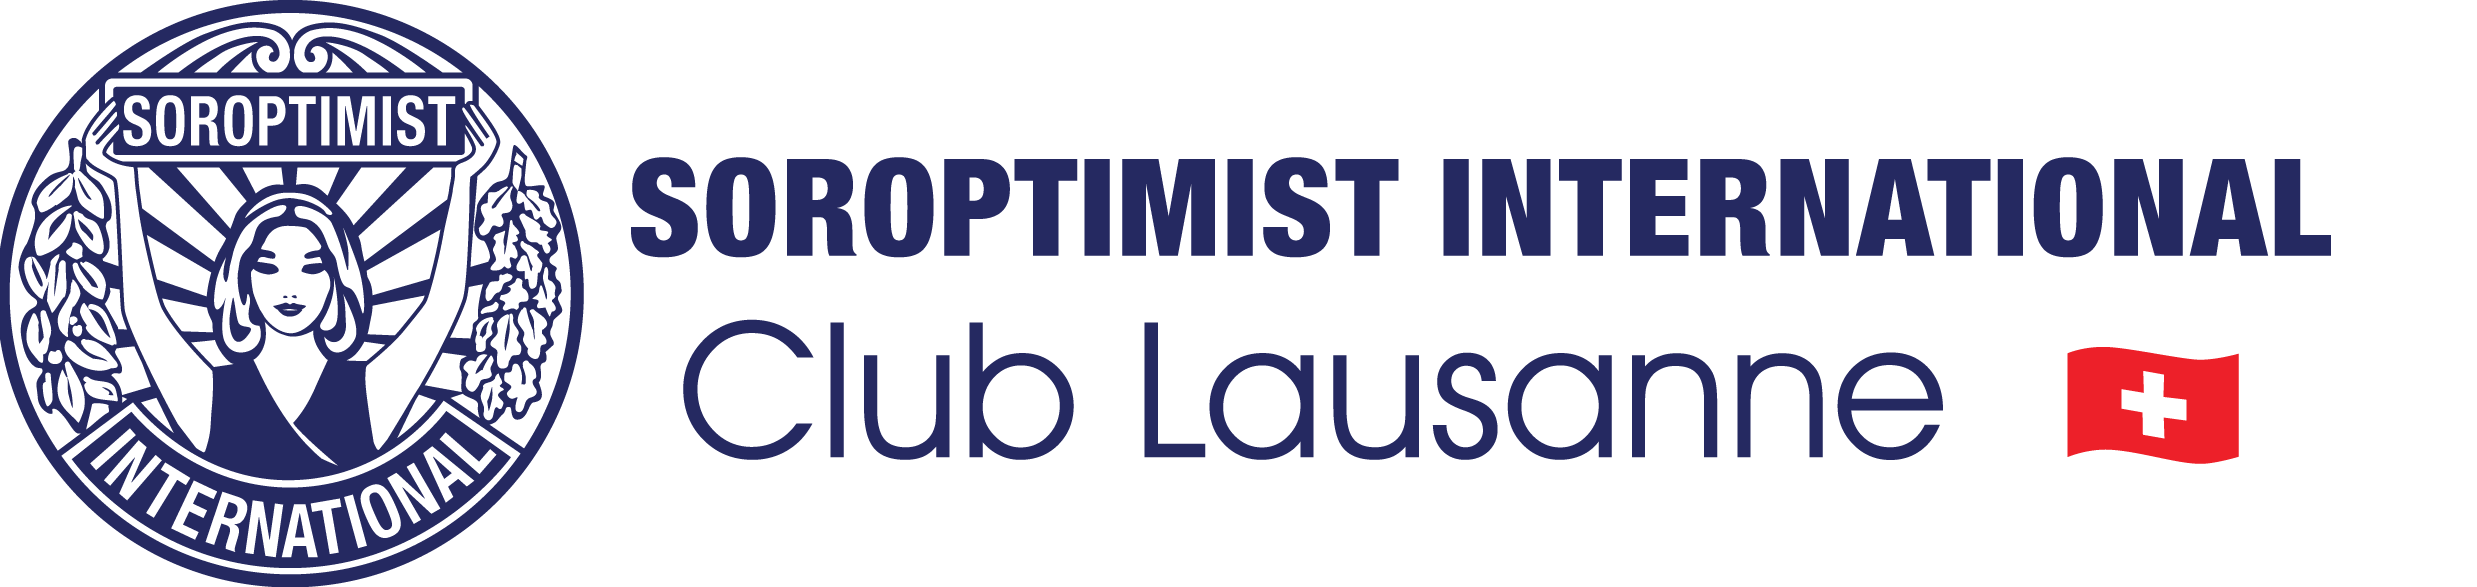 Soroptimist International Club de Lausanne